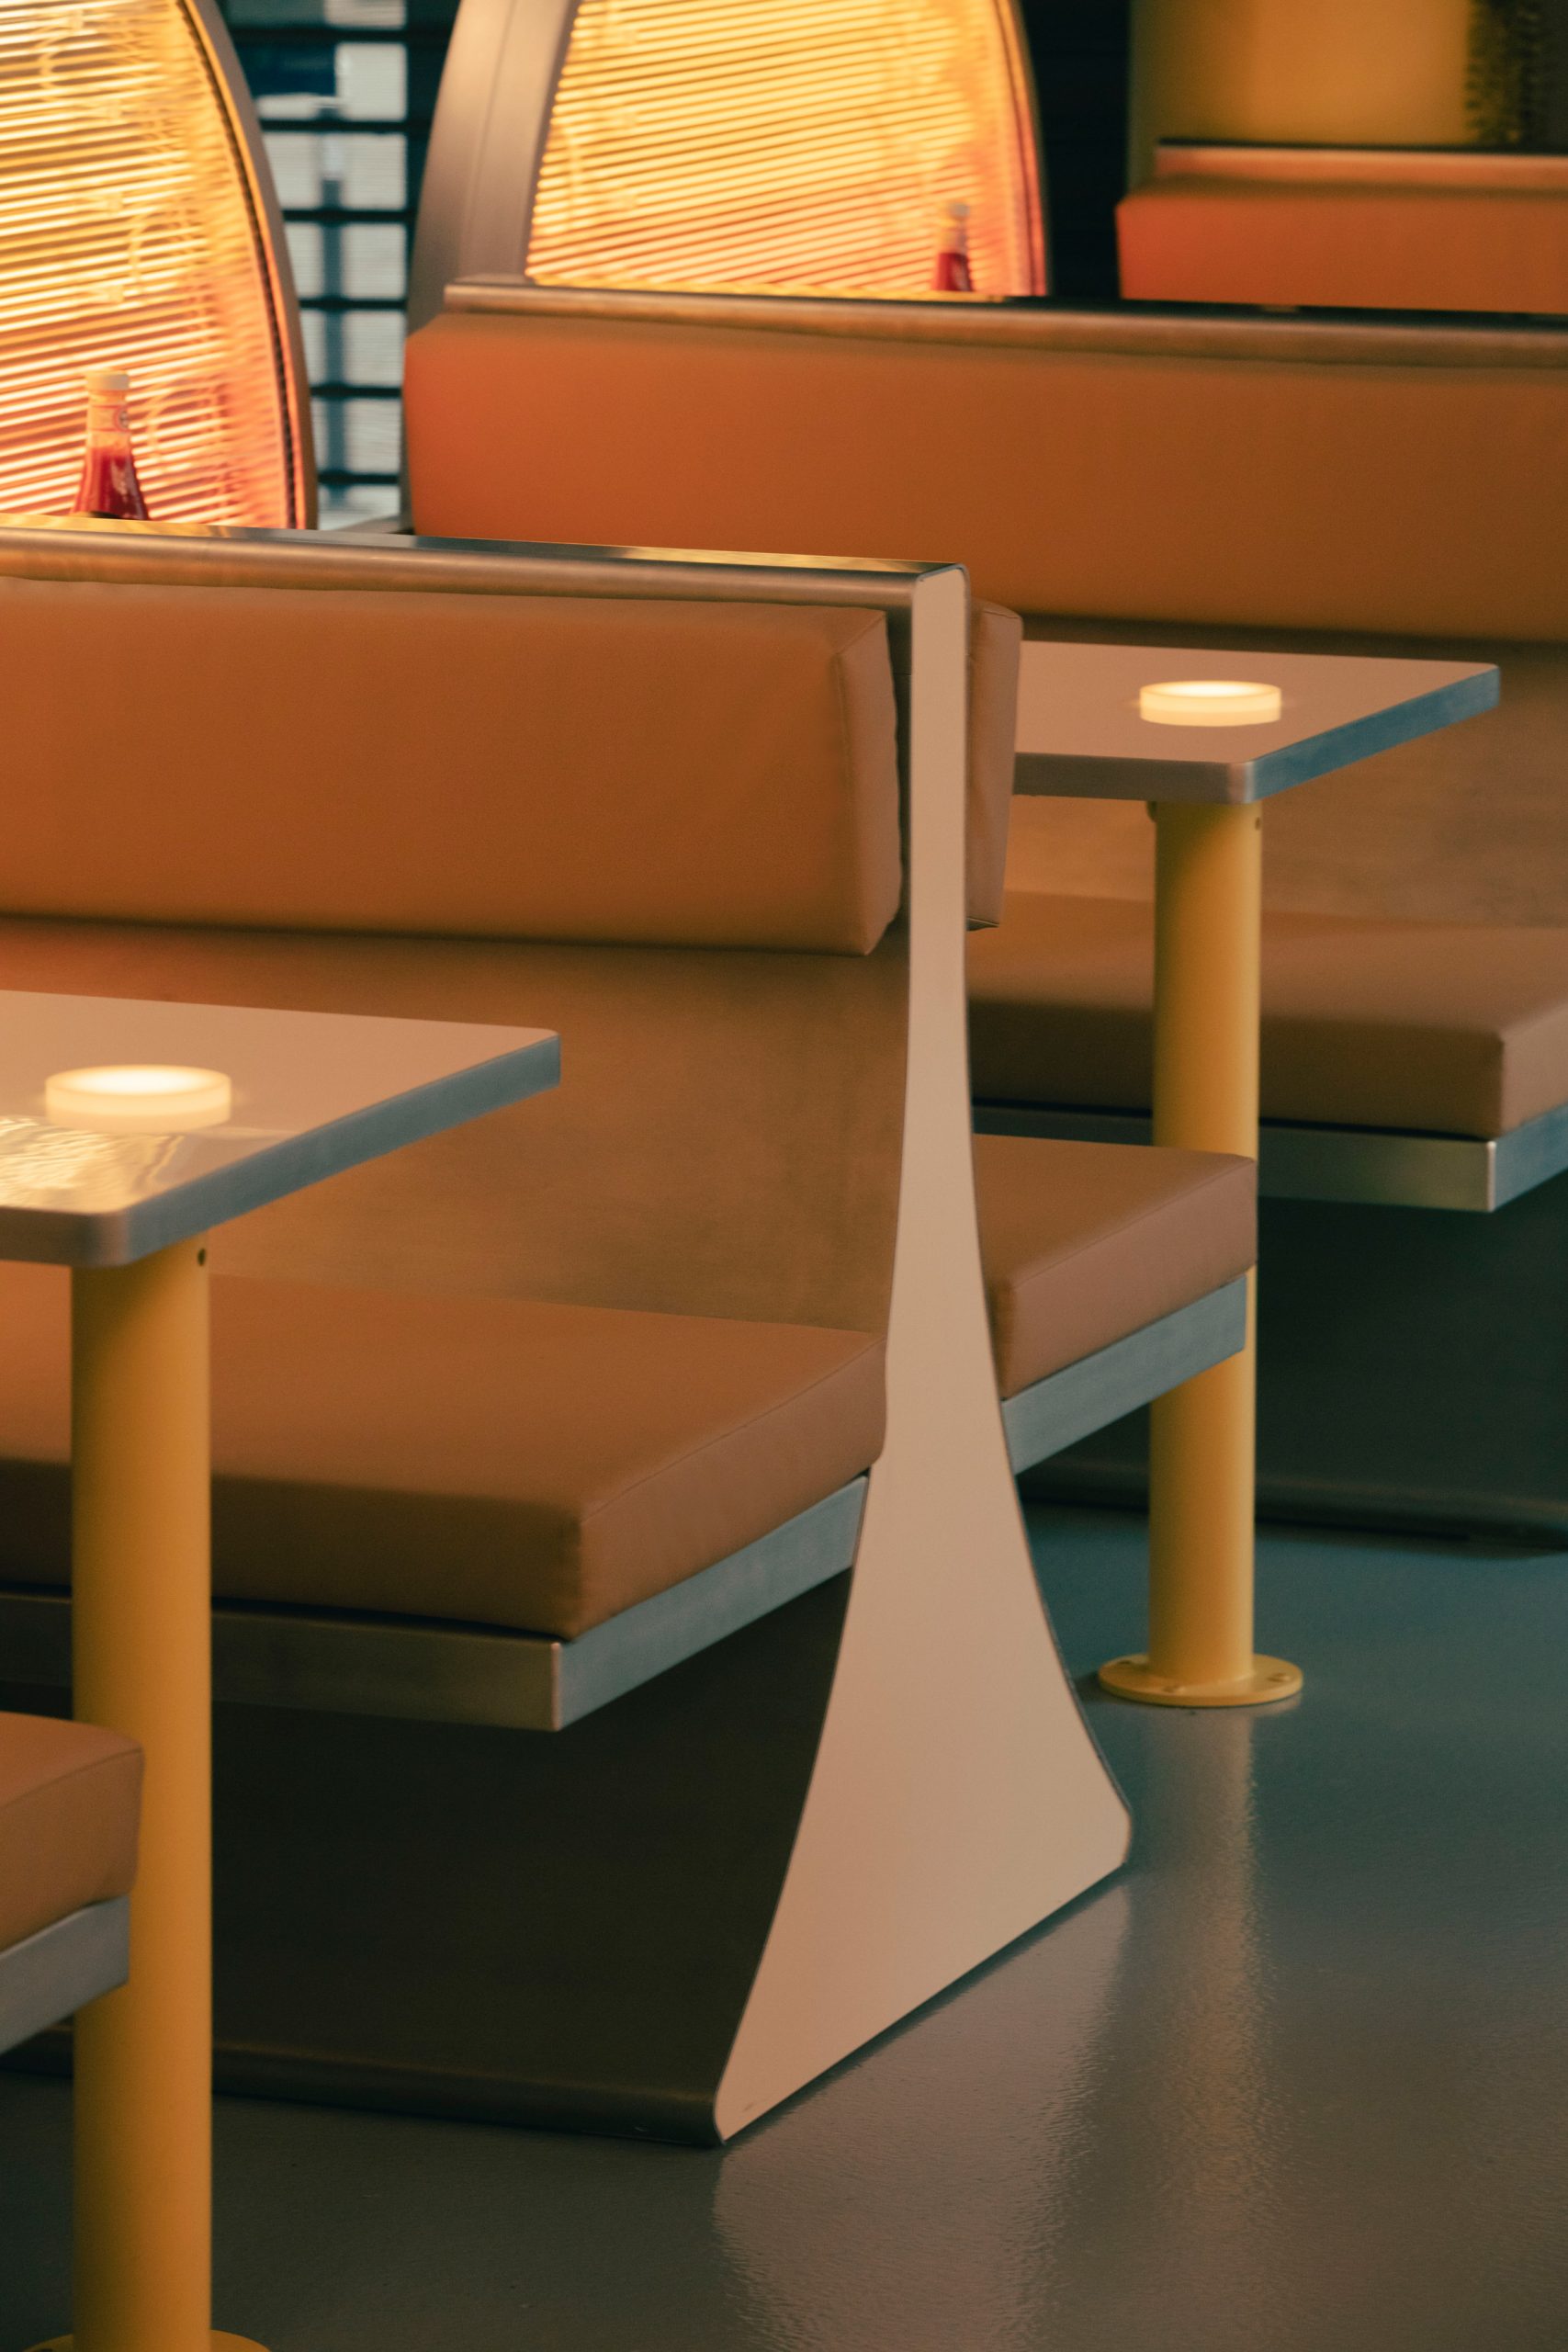 Booth seating has an angular design